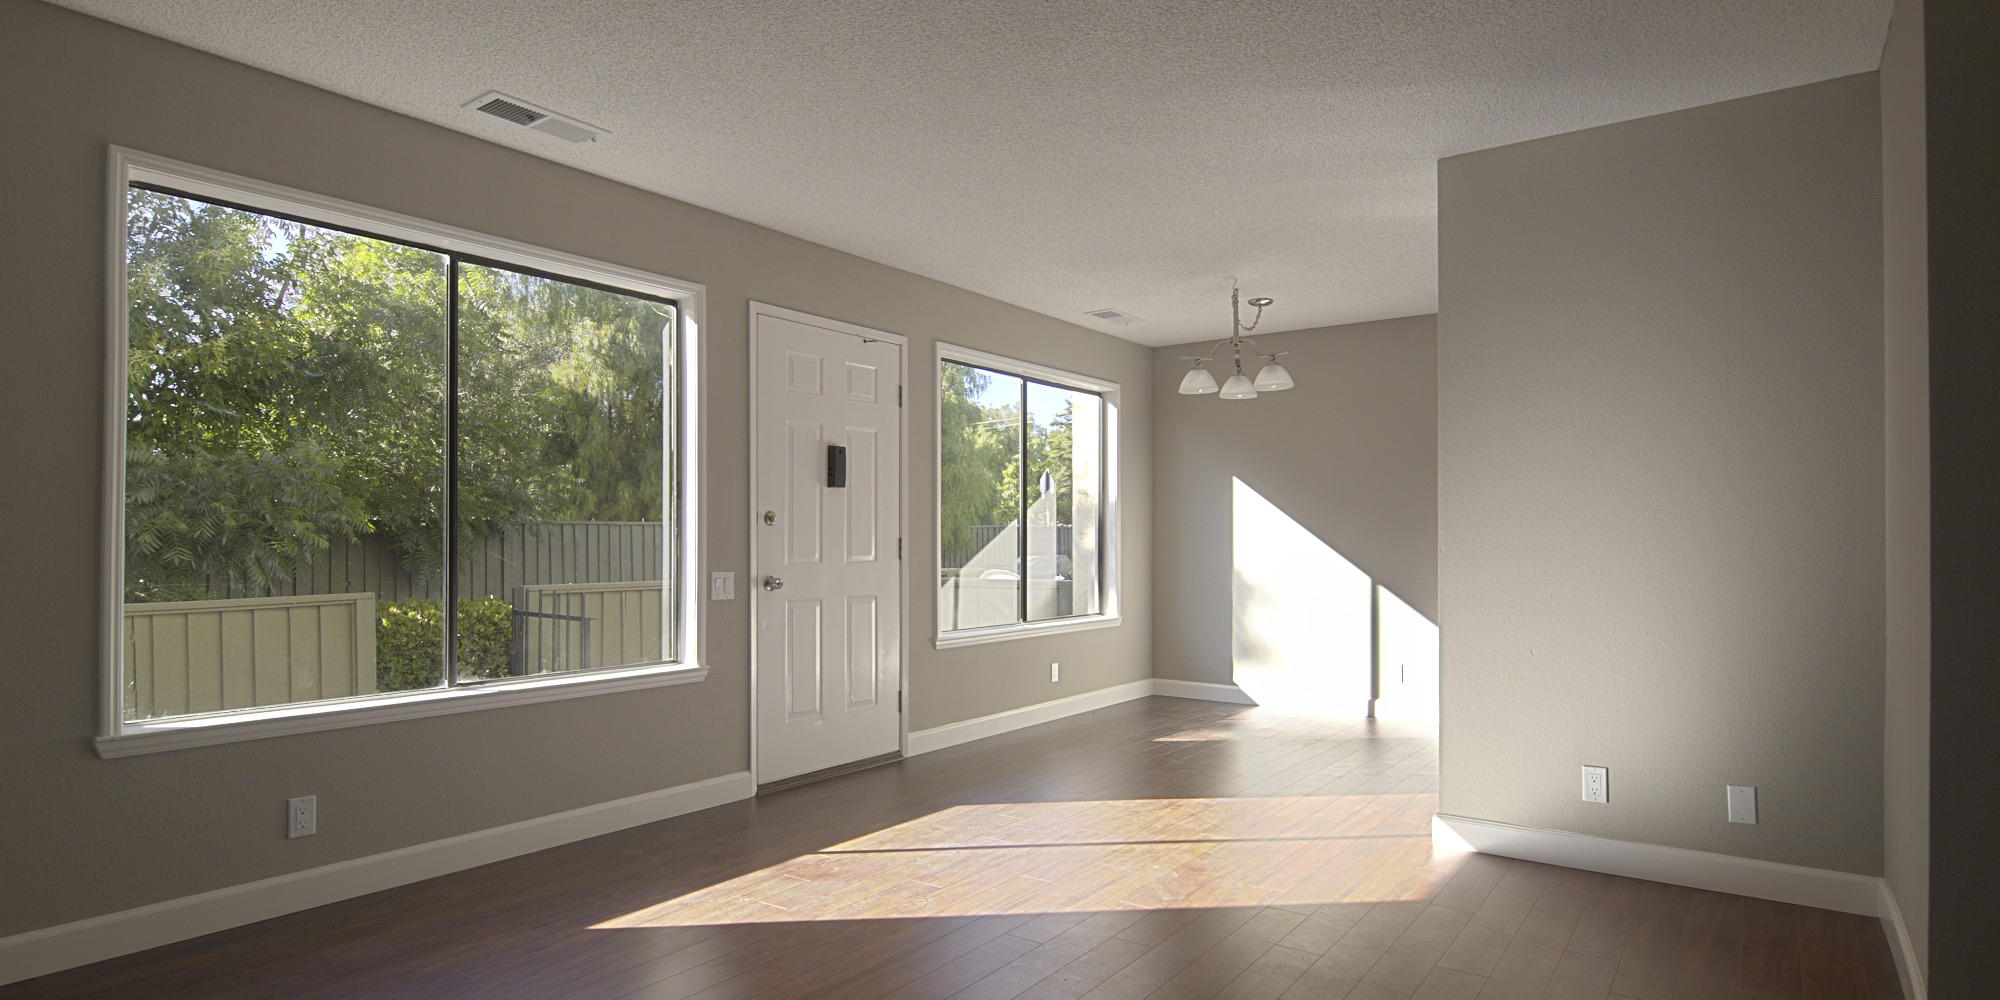 Interior remodeling & renovations, hardwood & tile flooring, interior stairs, closets, balconies